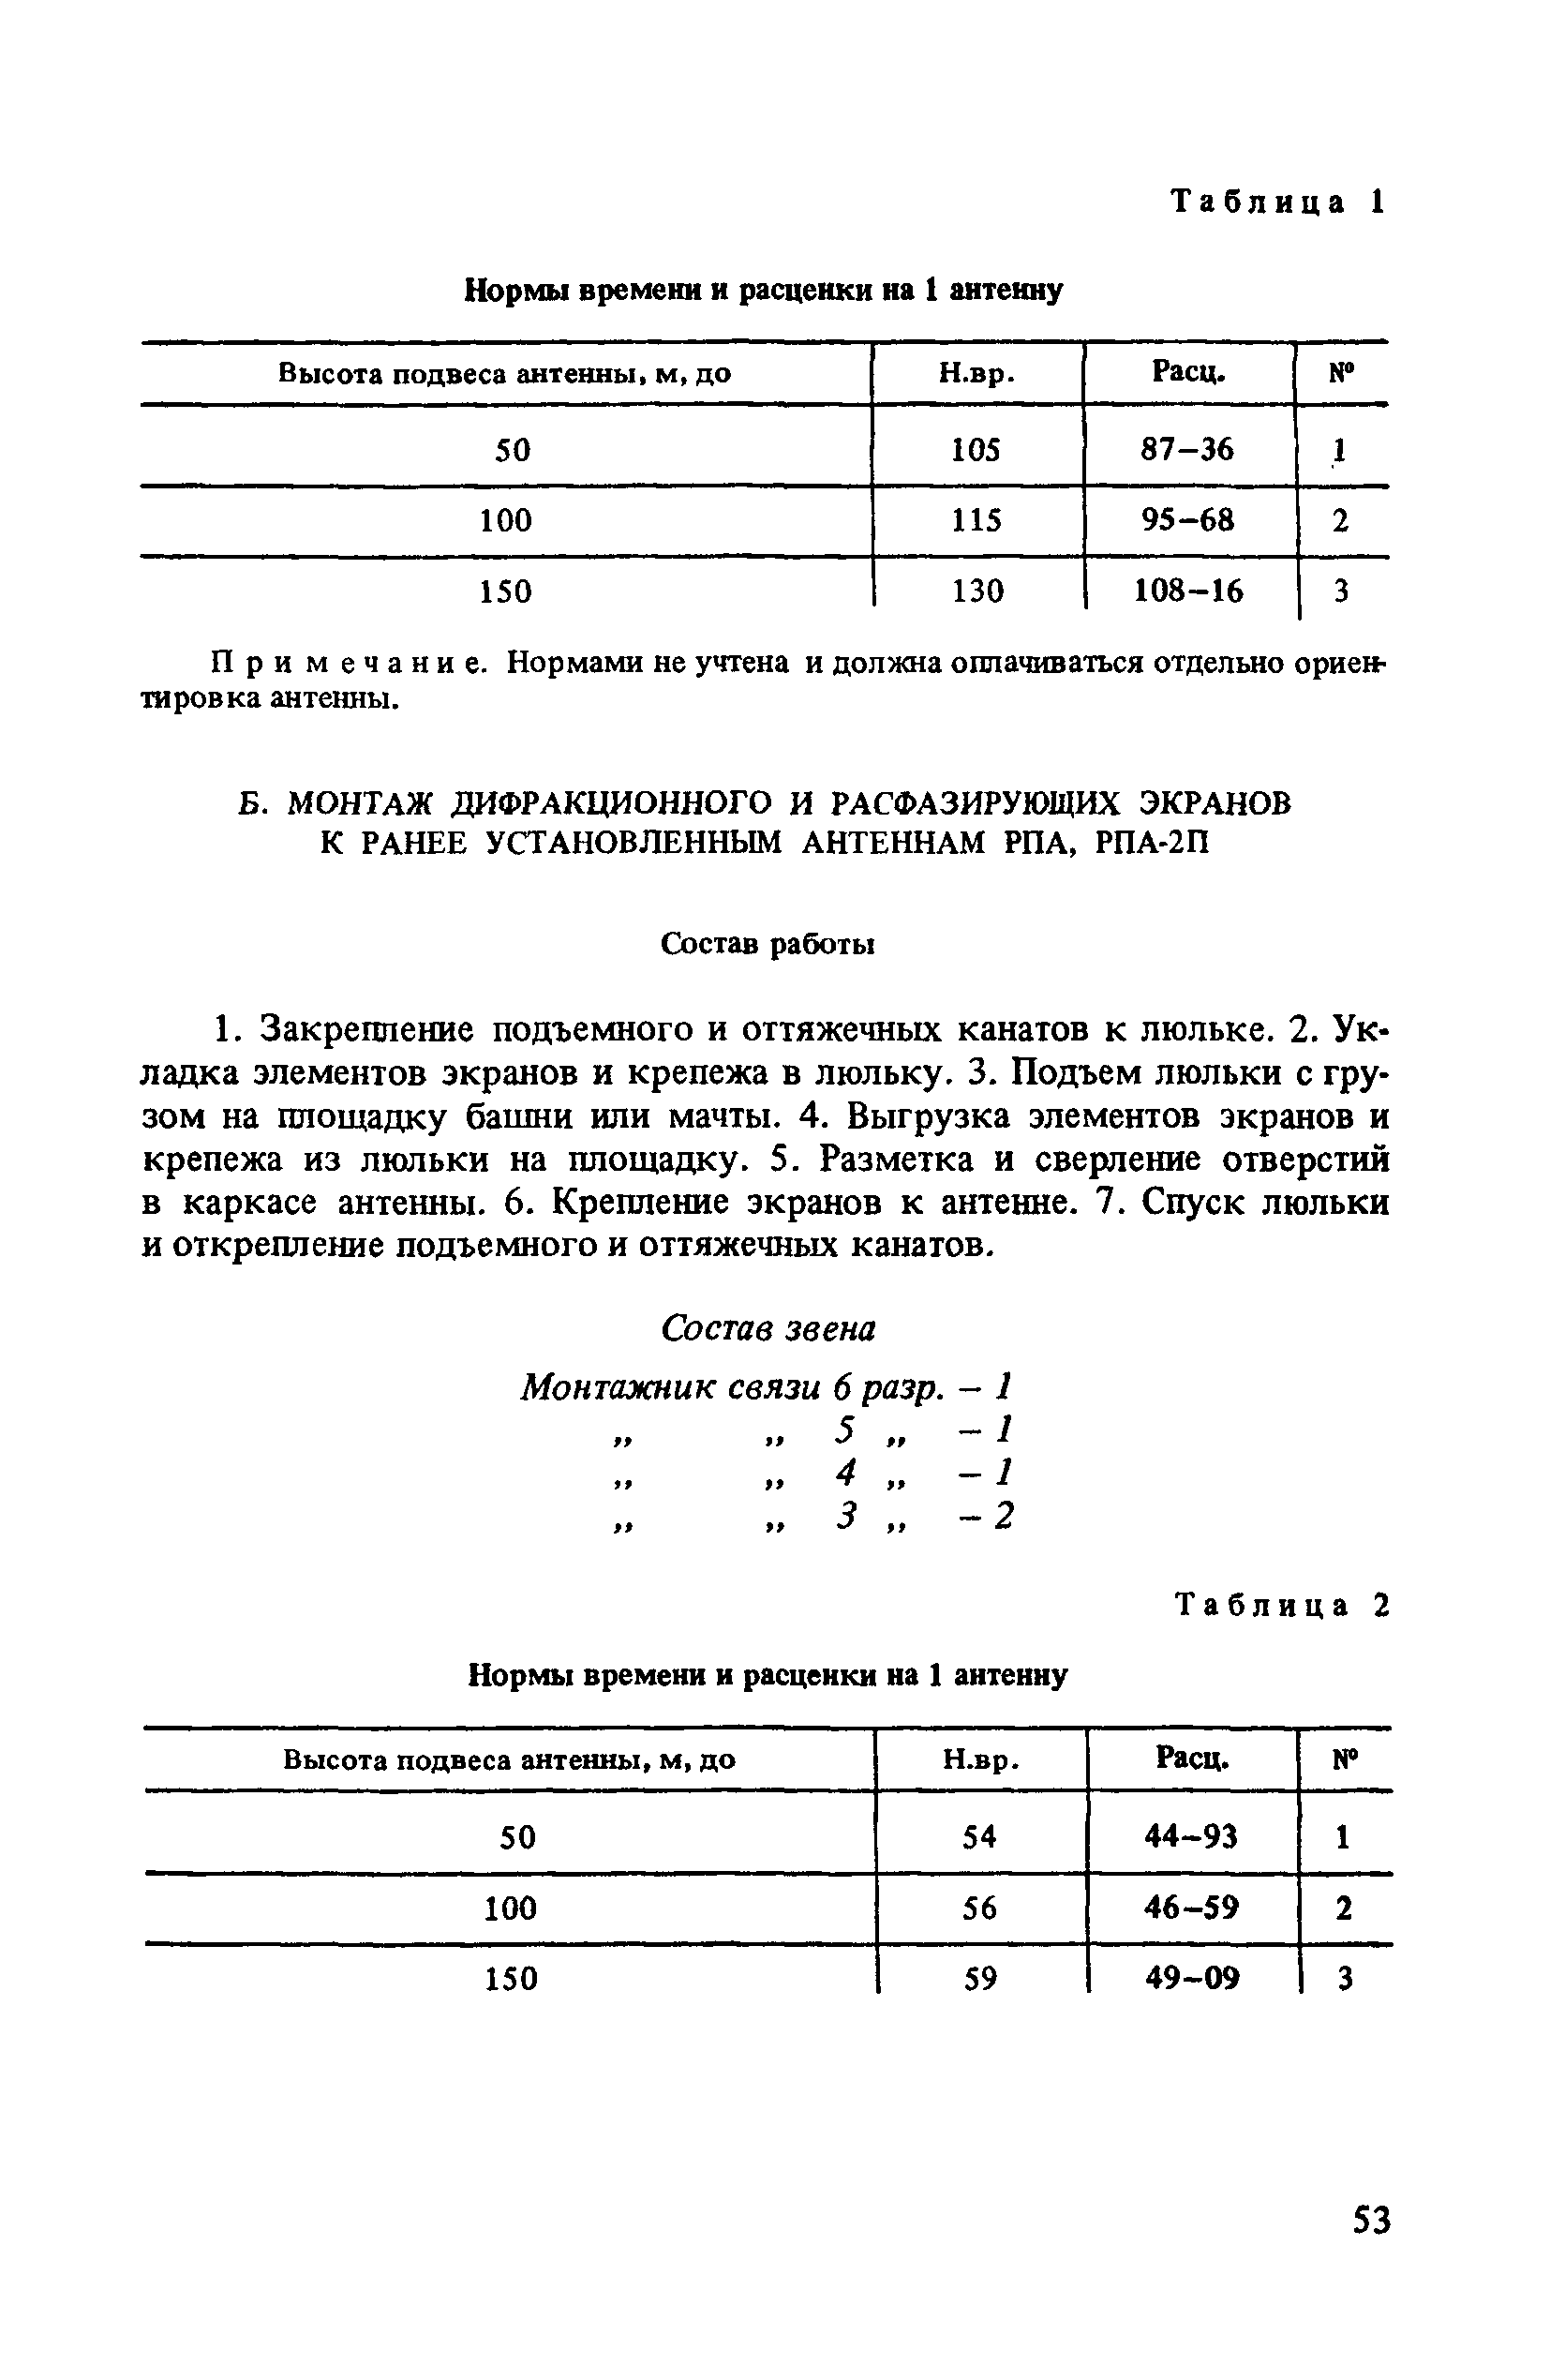 ВНиР В7-2